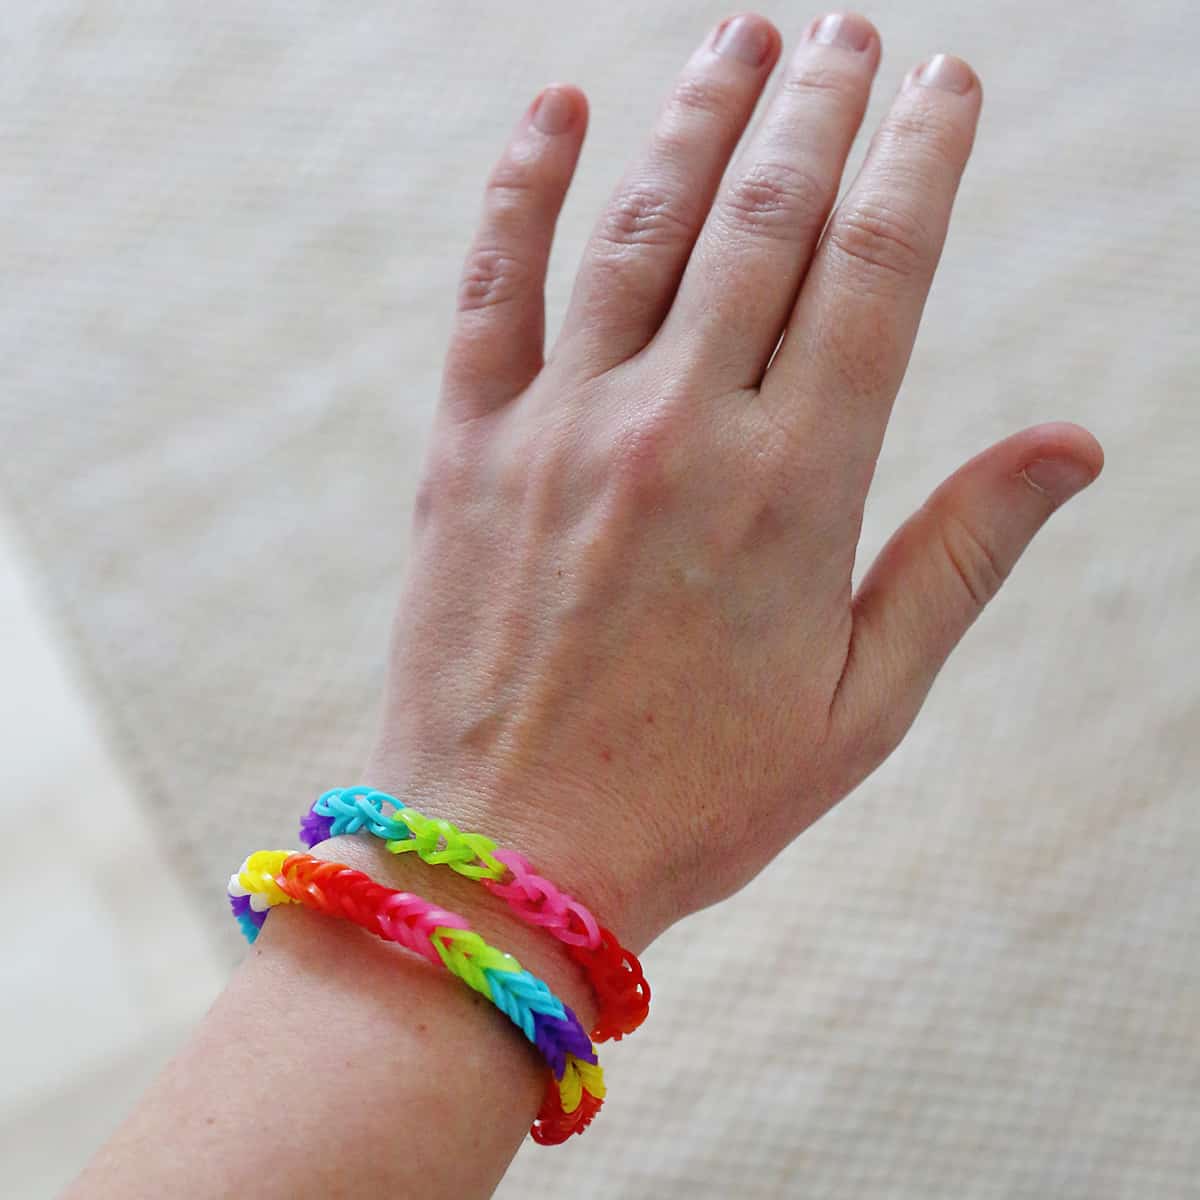 cool rubber band bracelets